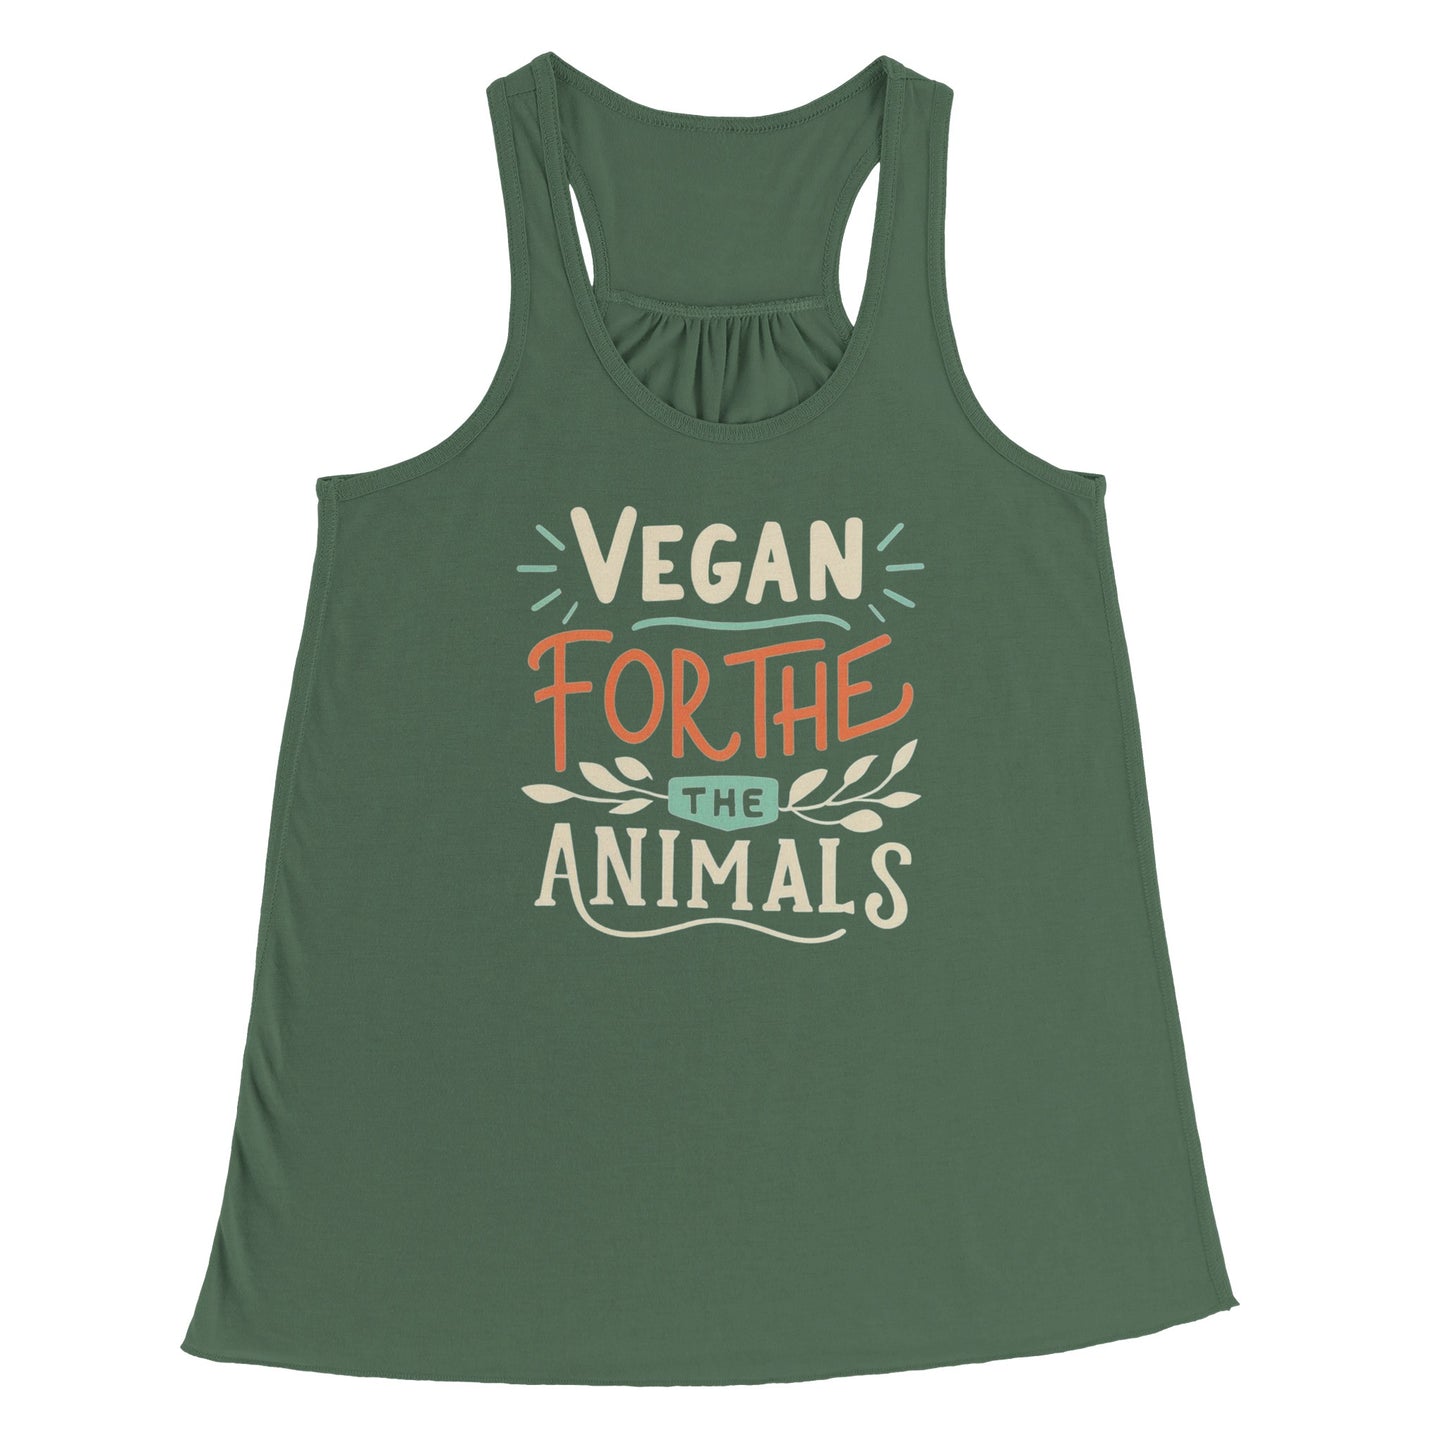 Vegan for the Animals - Women's Flowy Racerback Tank Top